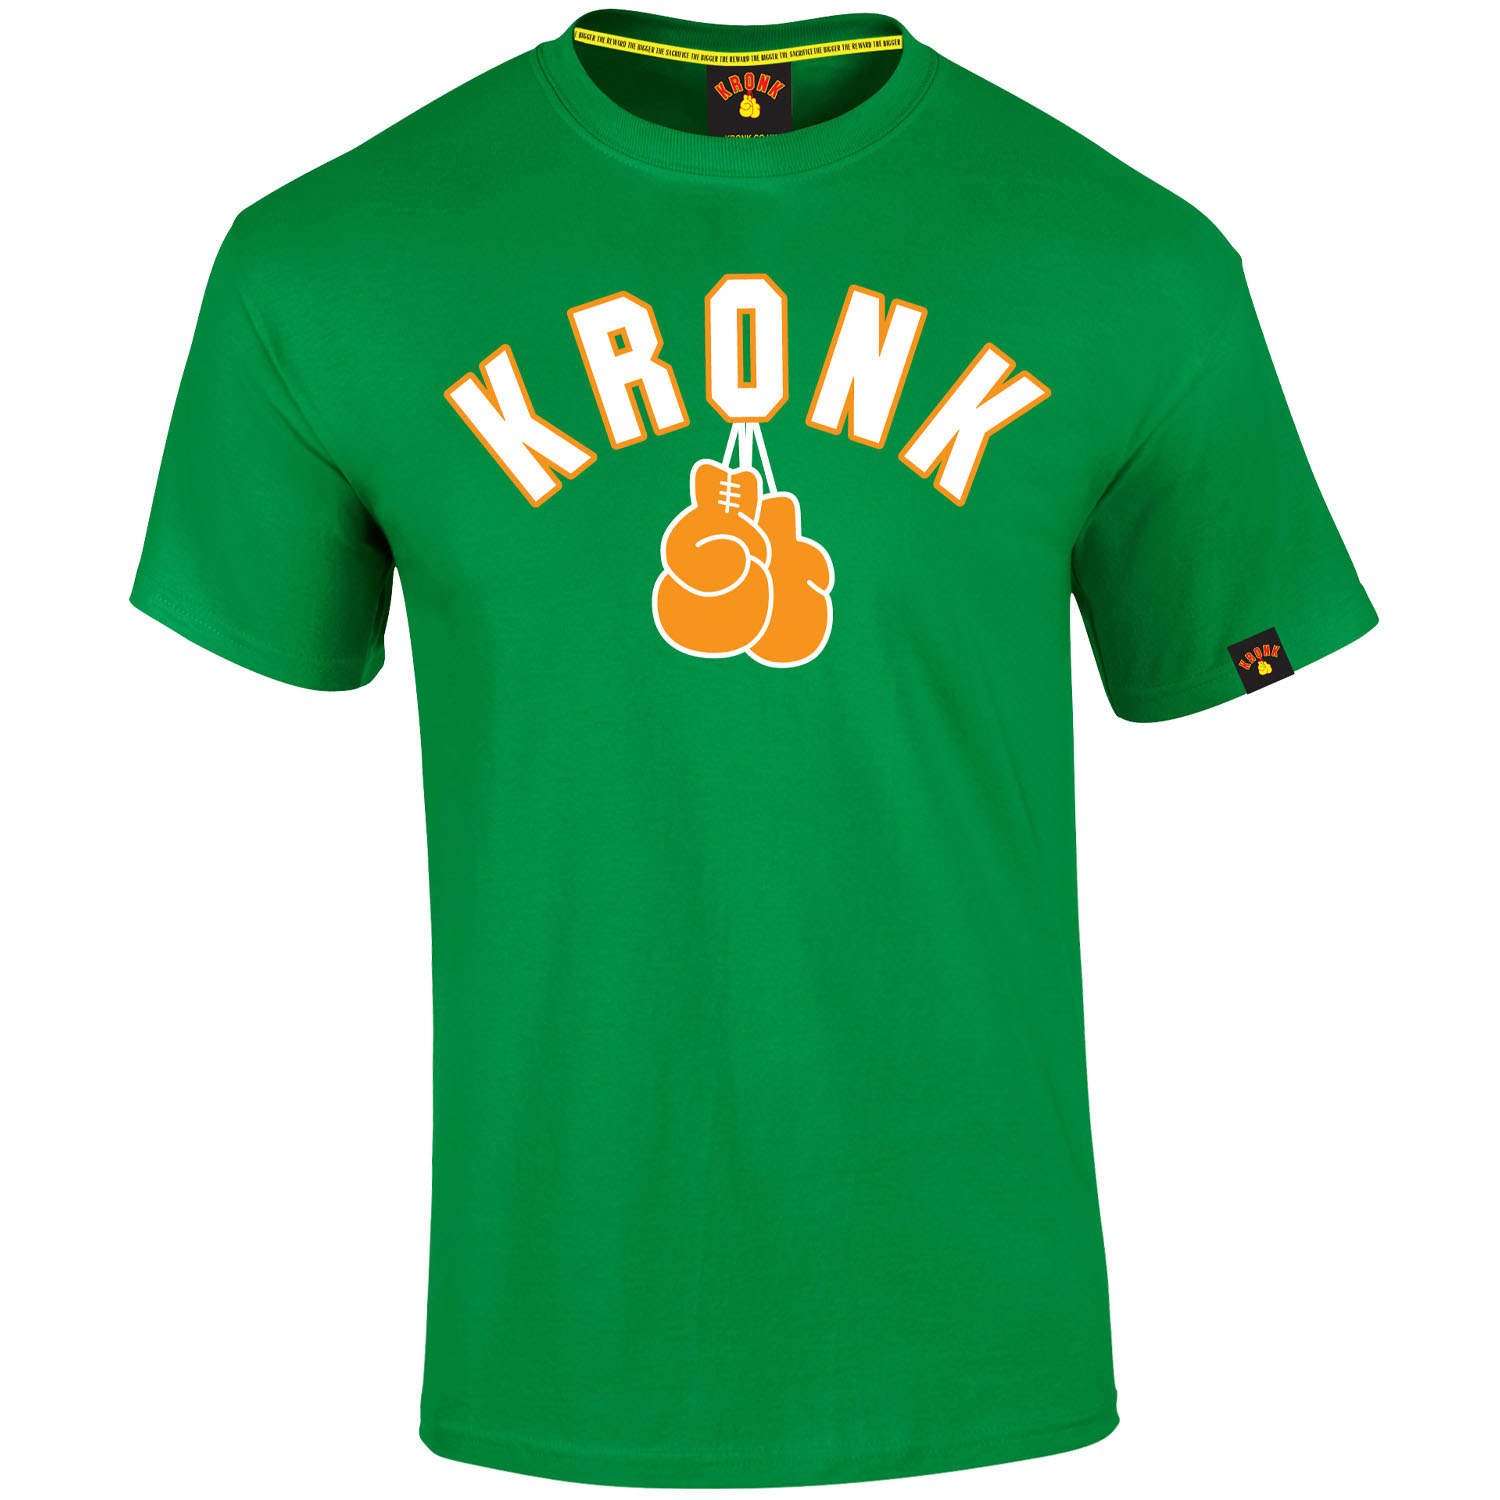 KRONK T-Shirt, Glove, grün, S